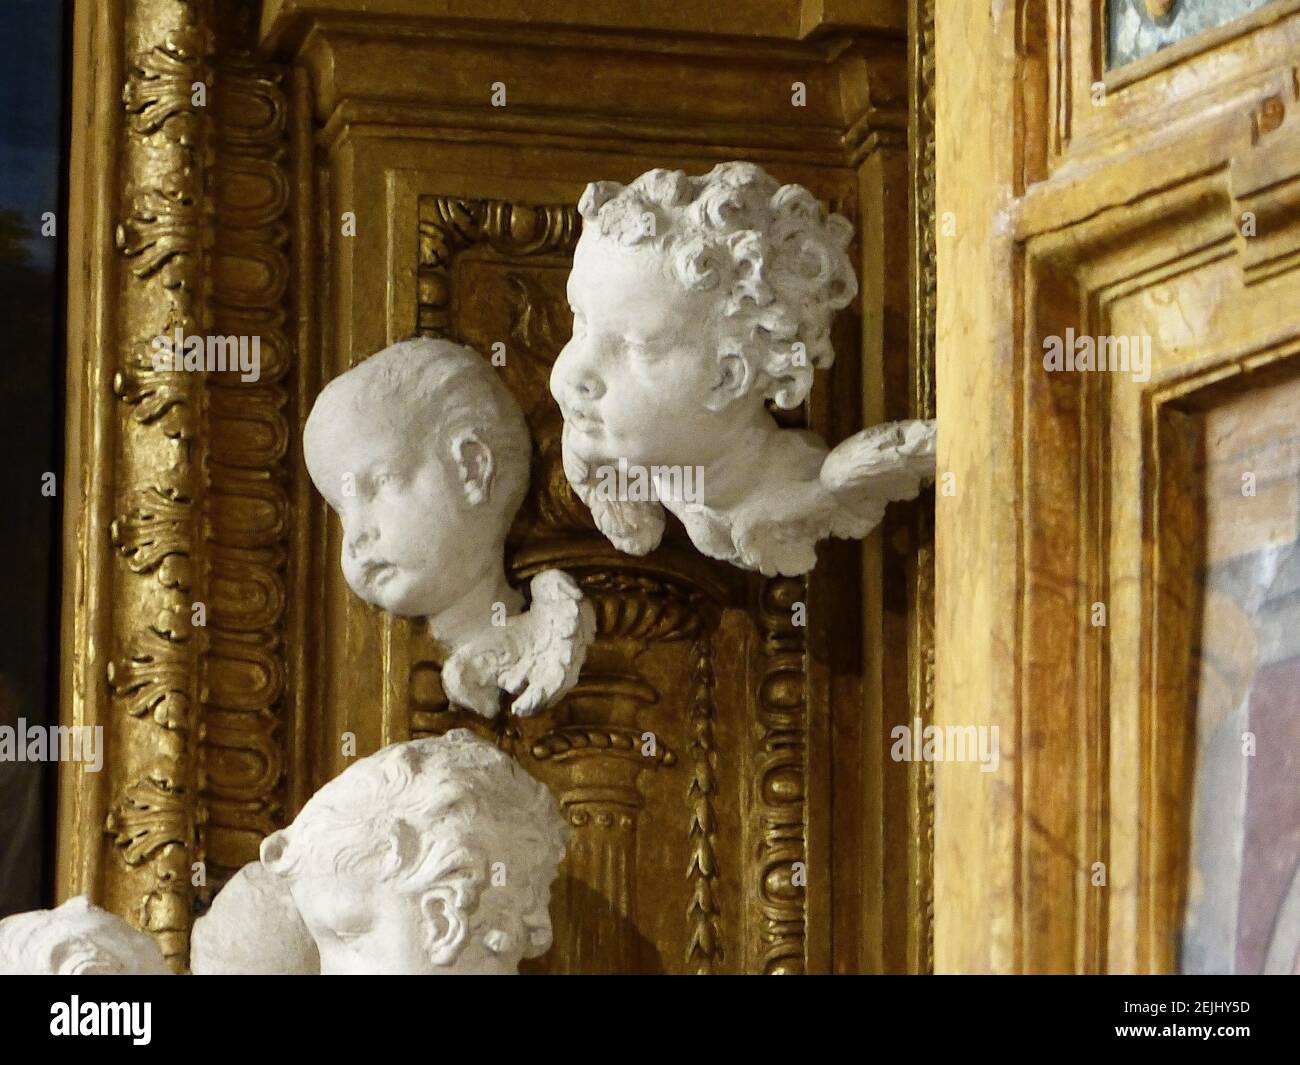 La magnífica estatua de Ludovica Albertoni del escultor italiano Gian Lorenzo  Bernini ha vuelto a vivir después de 6 meses de obras de restauración. El  Bernini, de 76 años, esculpió la estatua